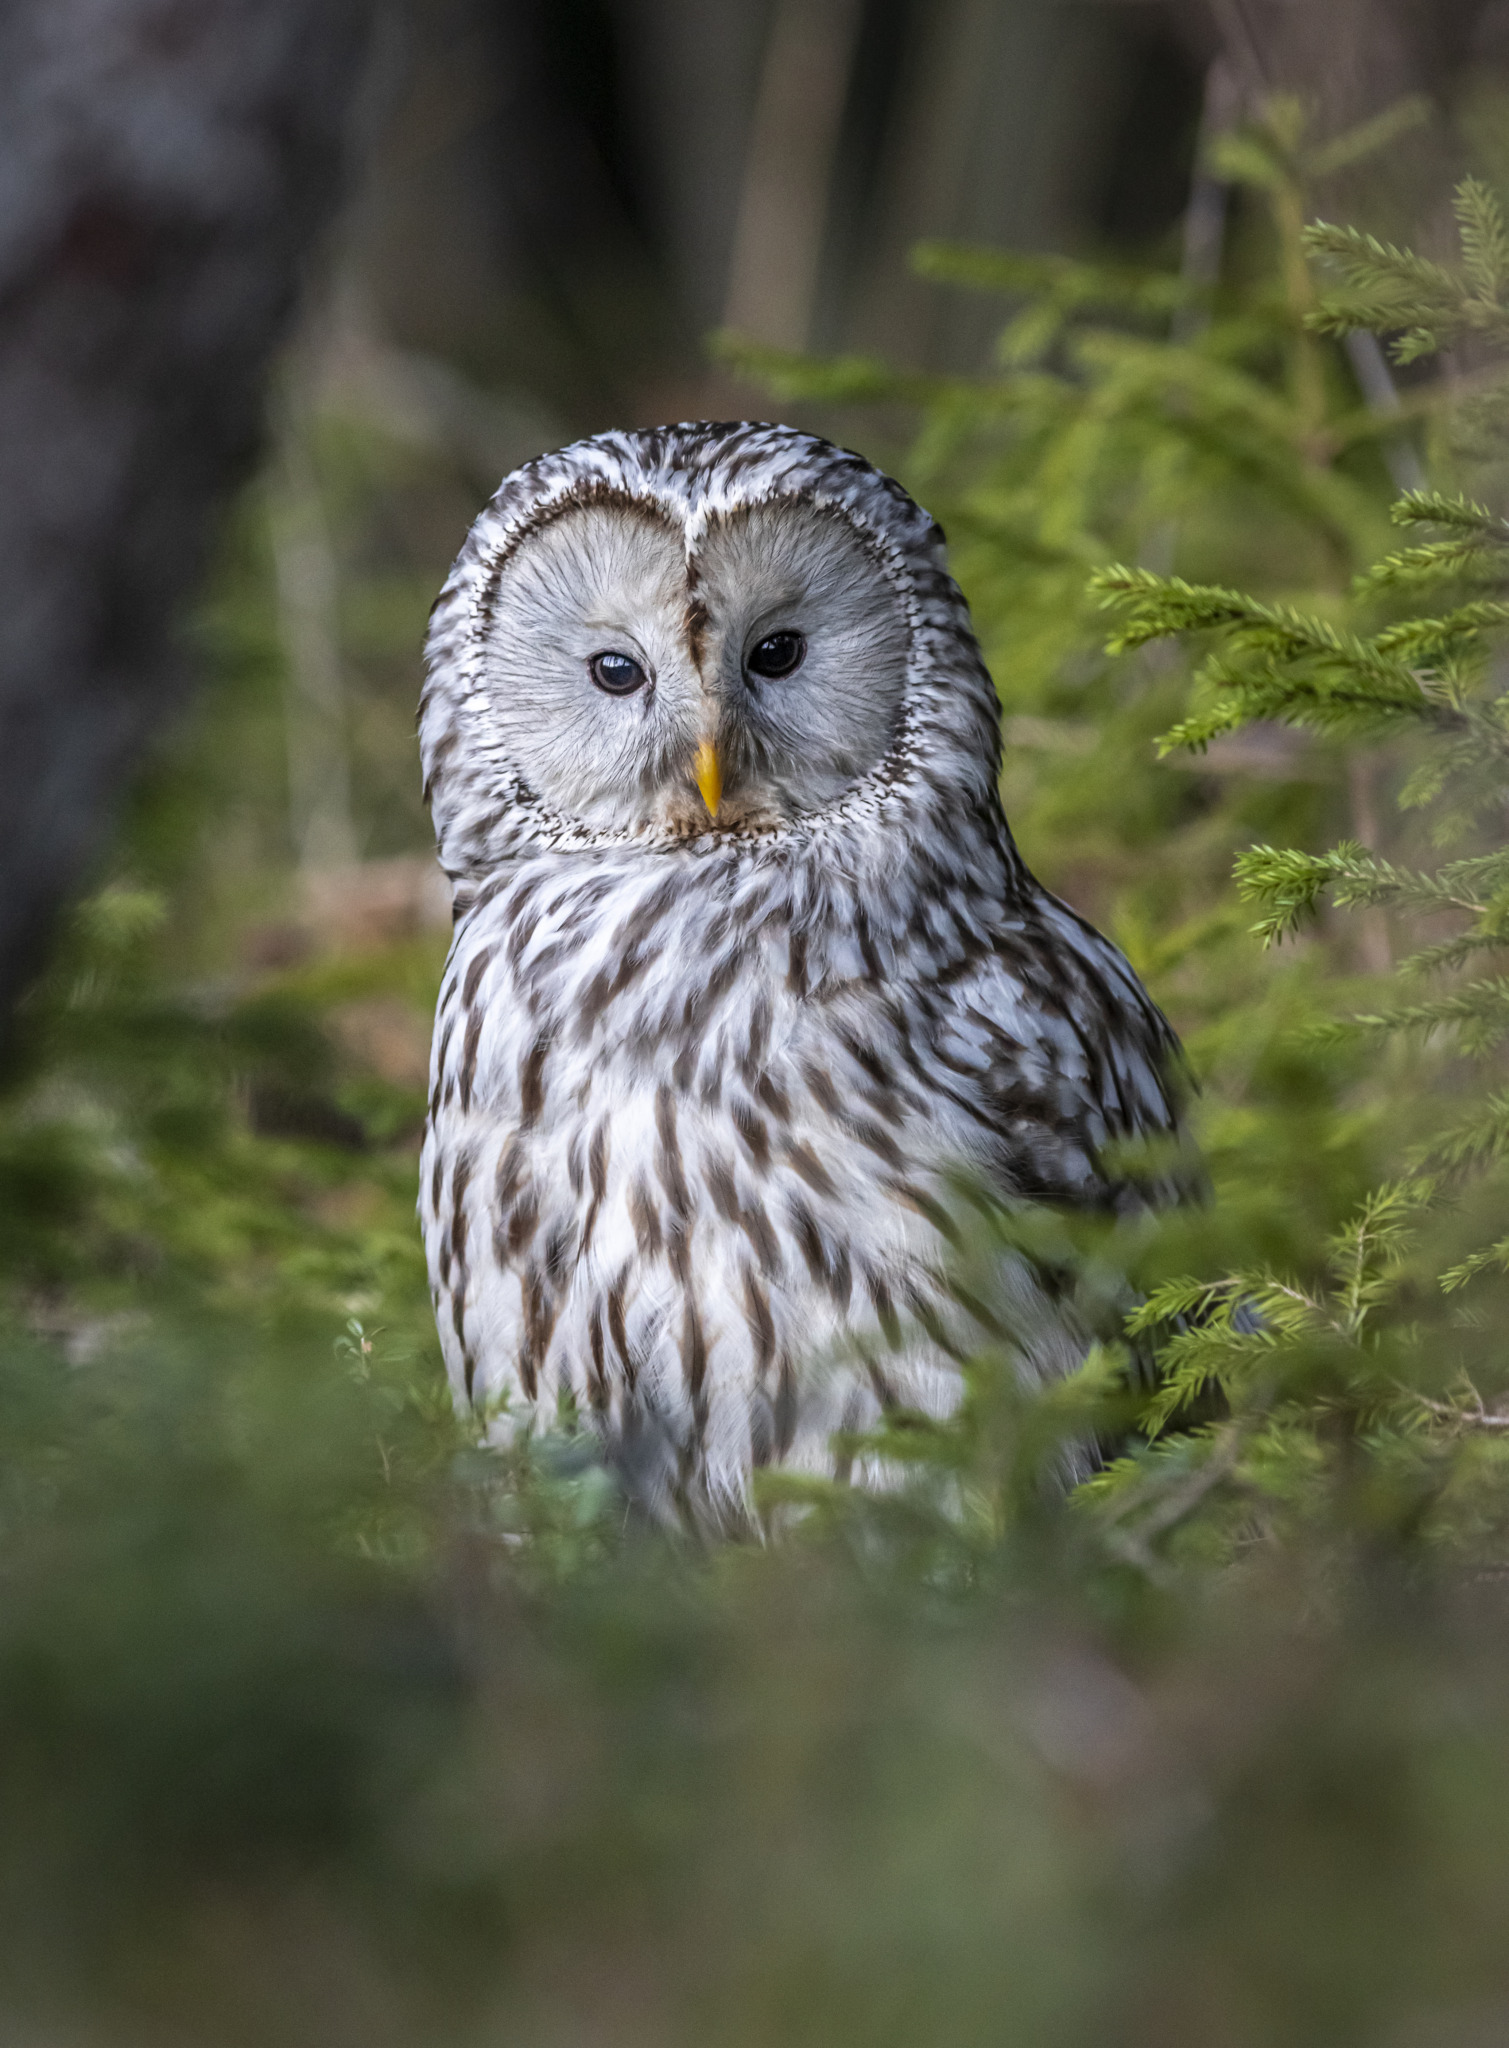 Händkakk, Ural owl (Strix uralensis)